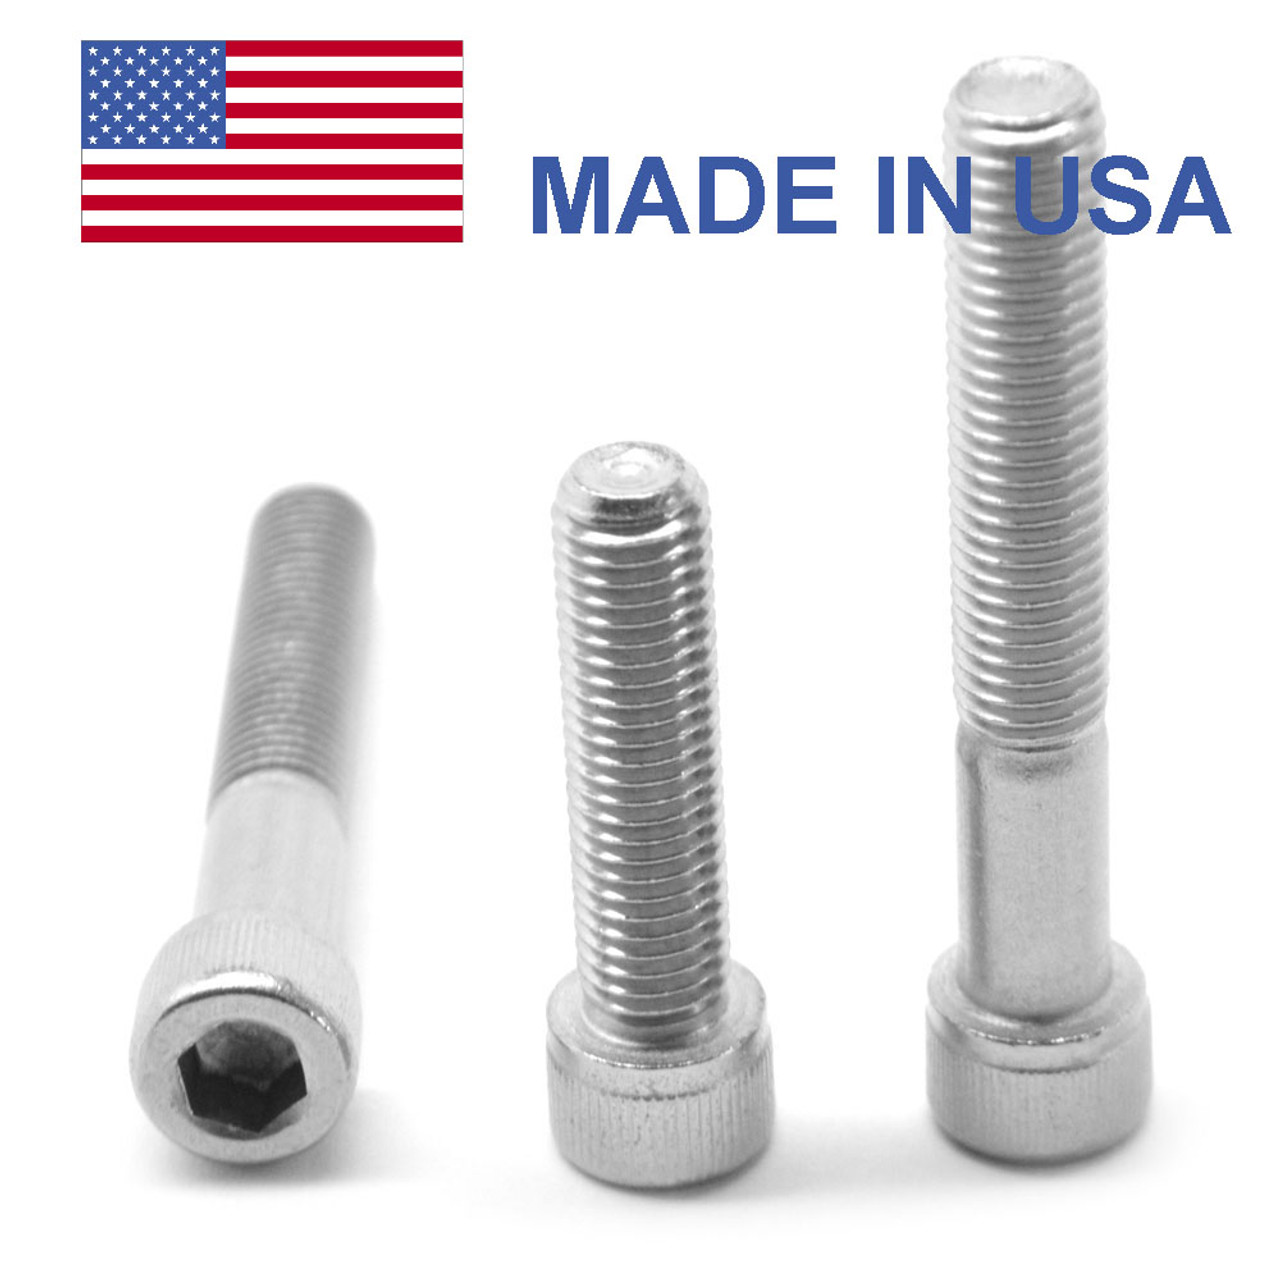 5/16-18 x 2 Coarse Thread Socket Head Cap Screw - USA Stainless Steel 18-8